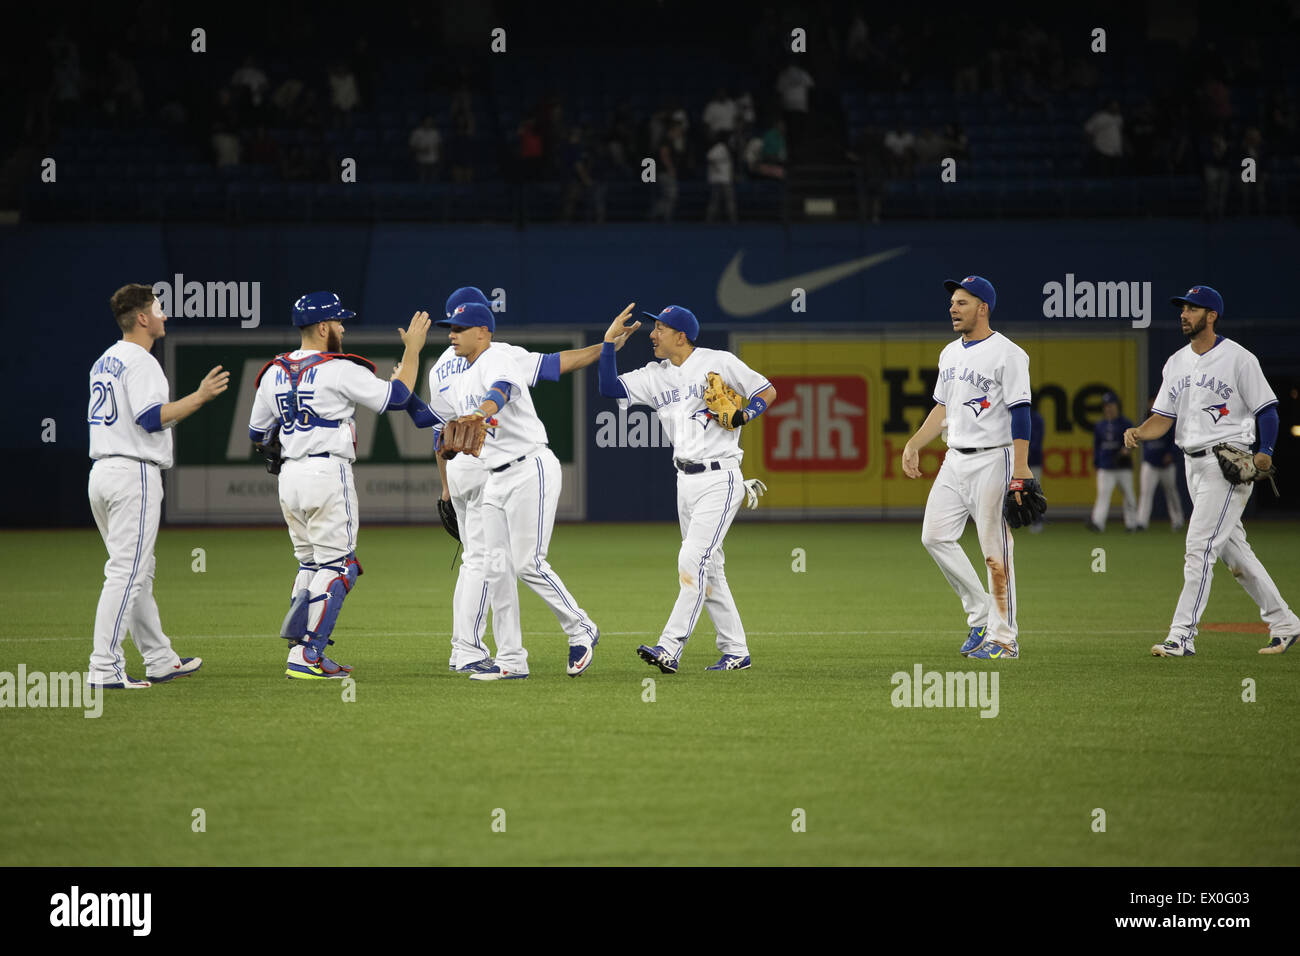 Los jugadores de béisbol celebrar win Blue Jays Foto de stock